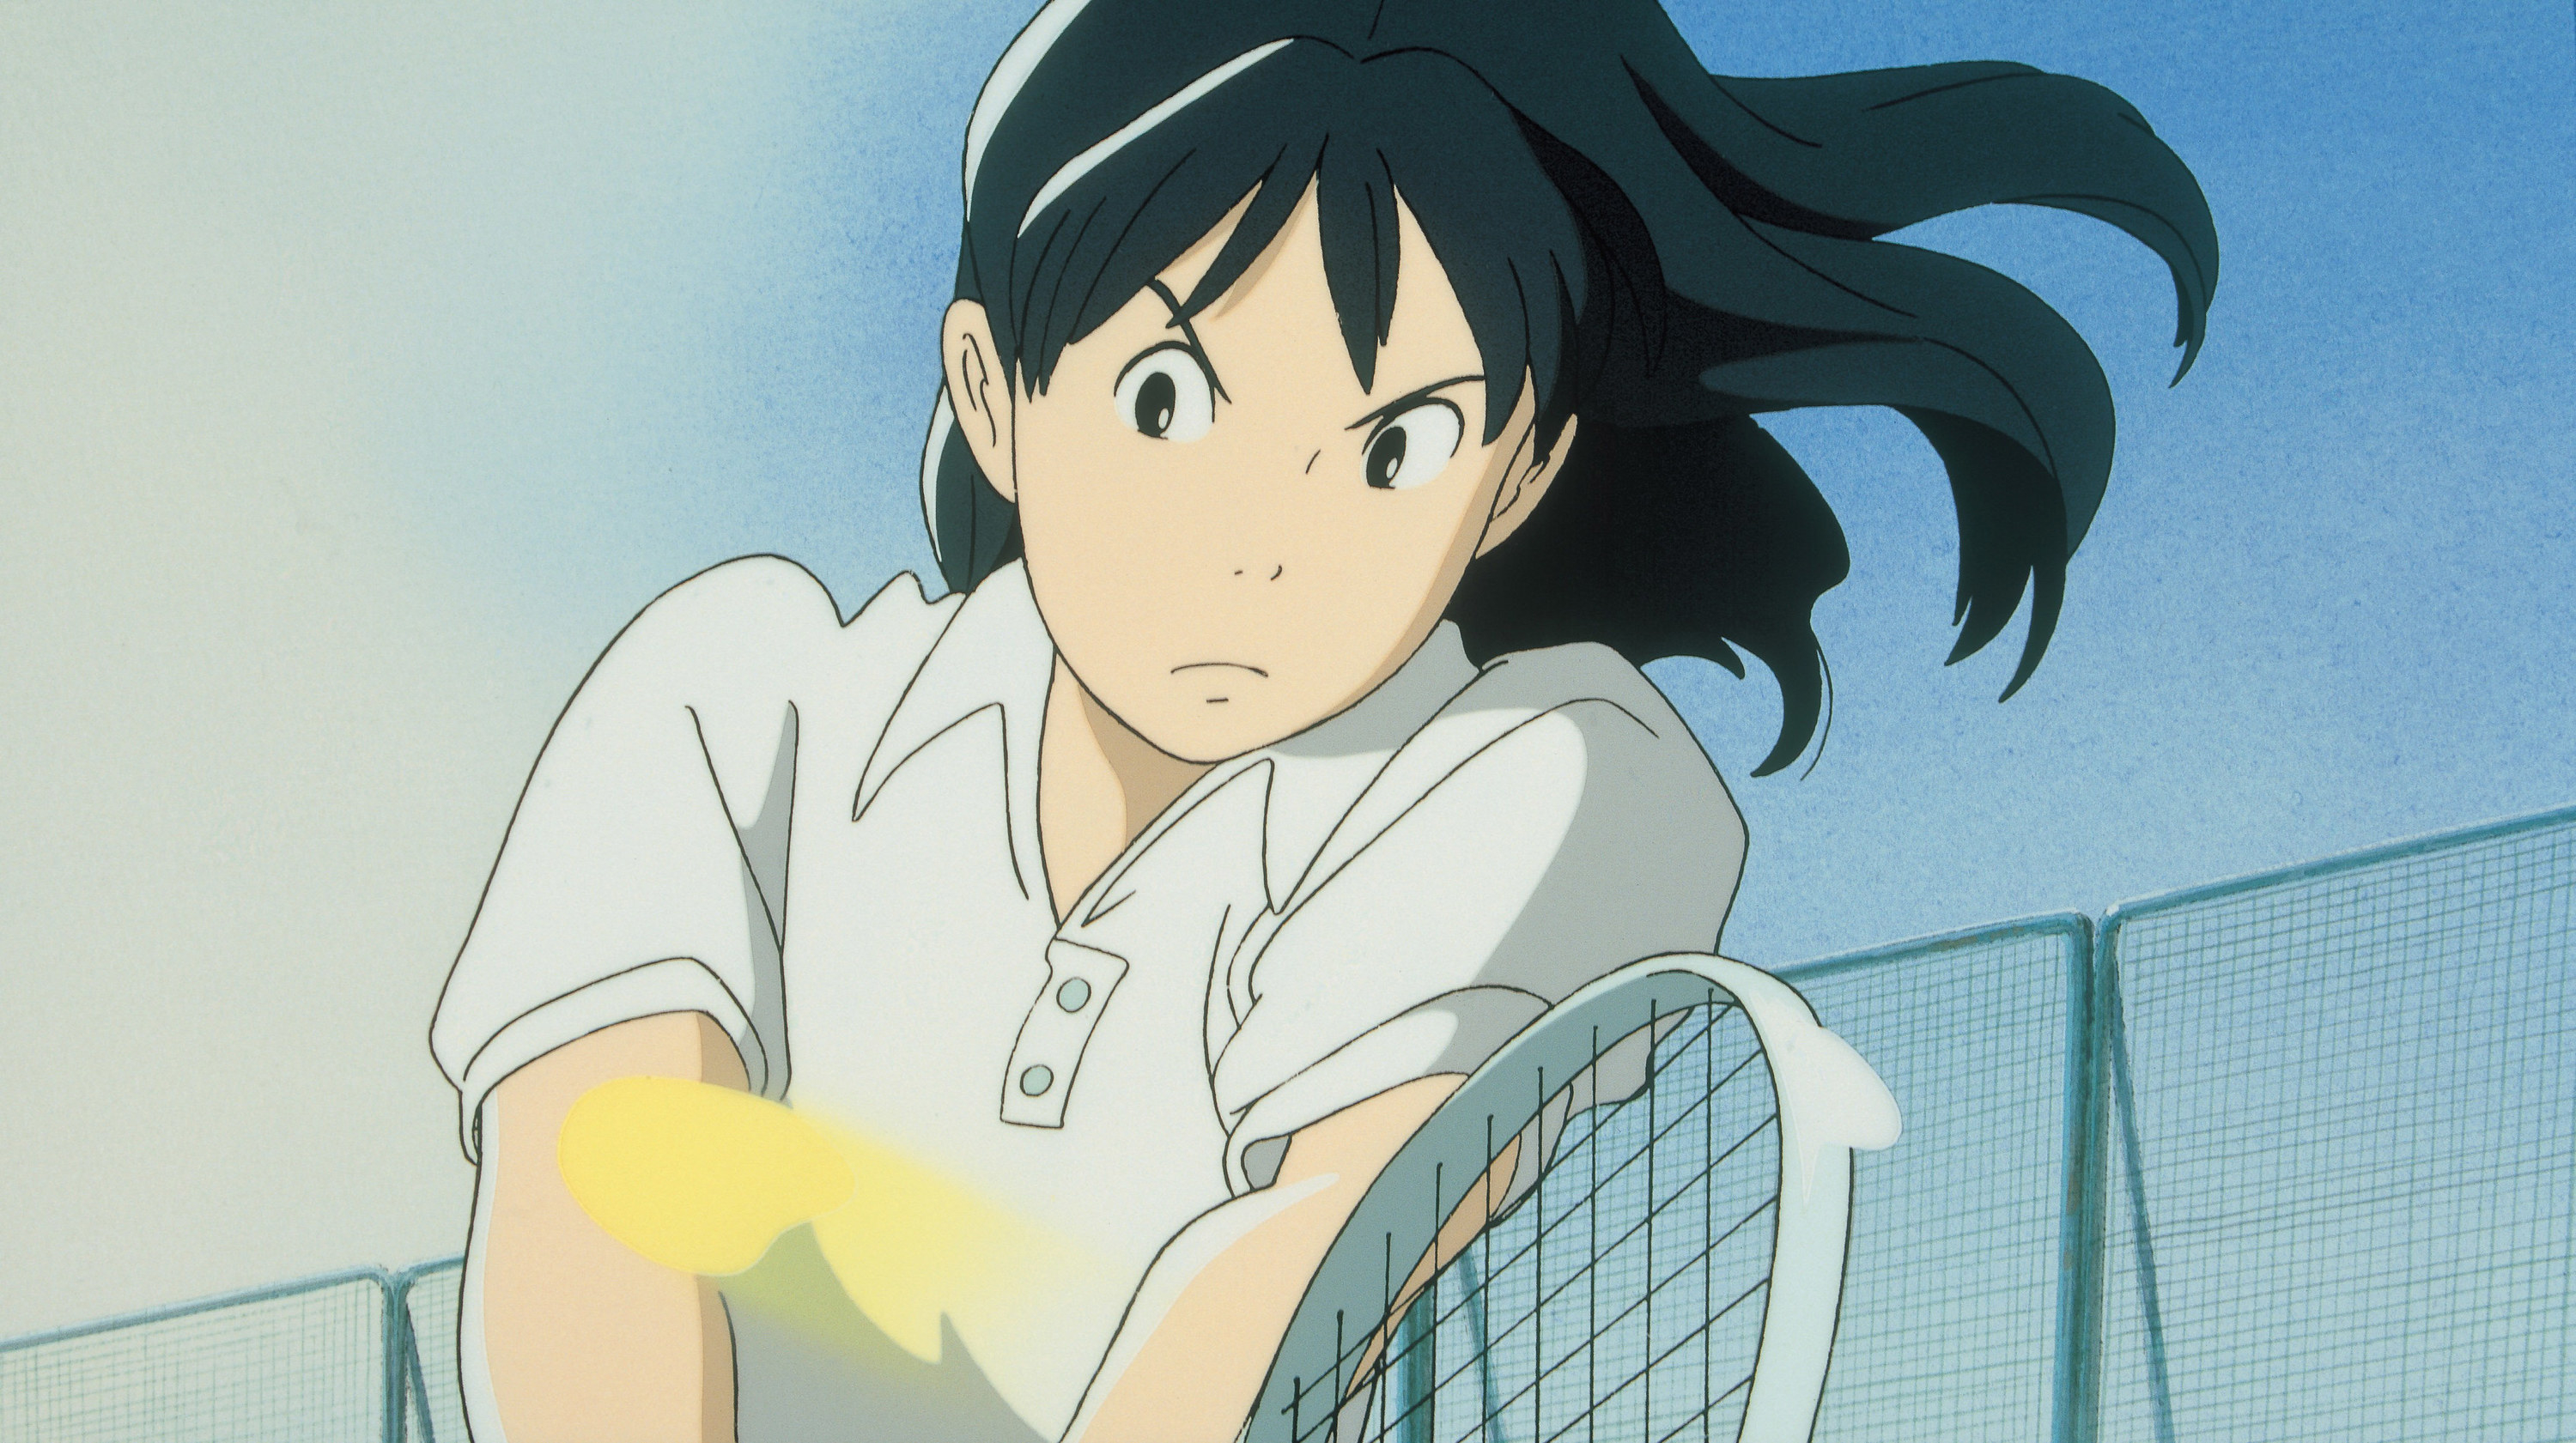 Rikako Muto playing tennis looking fierce